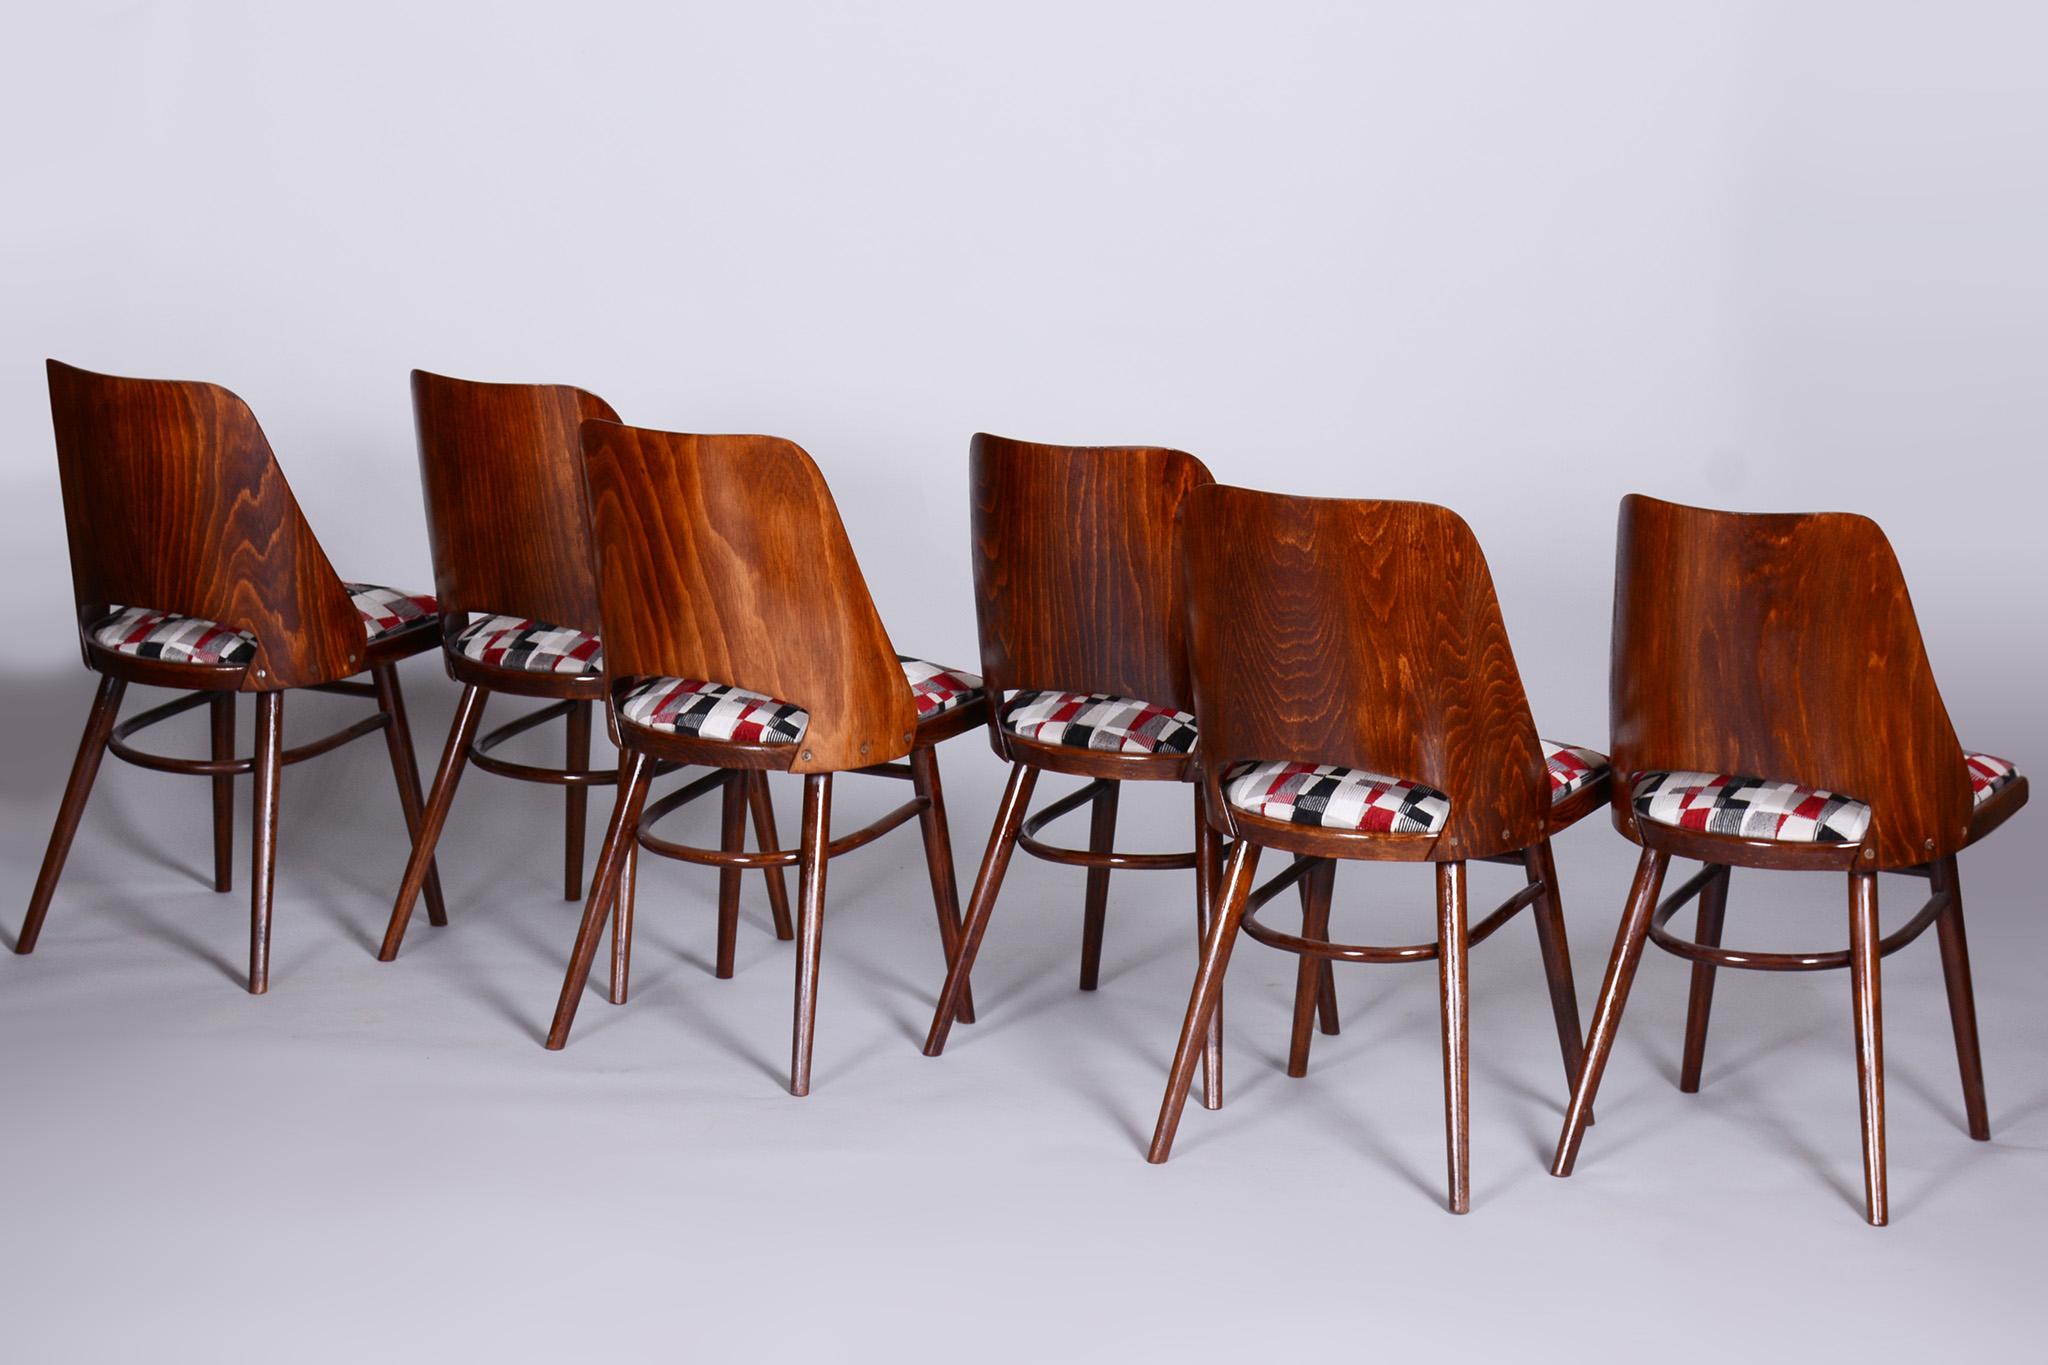 20th Century Set of Six Midcentury Beech Chairs, Oswald Heardtl, Restored, Czechia, 1950s For Sale